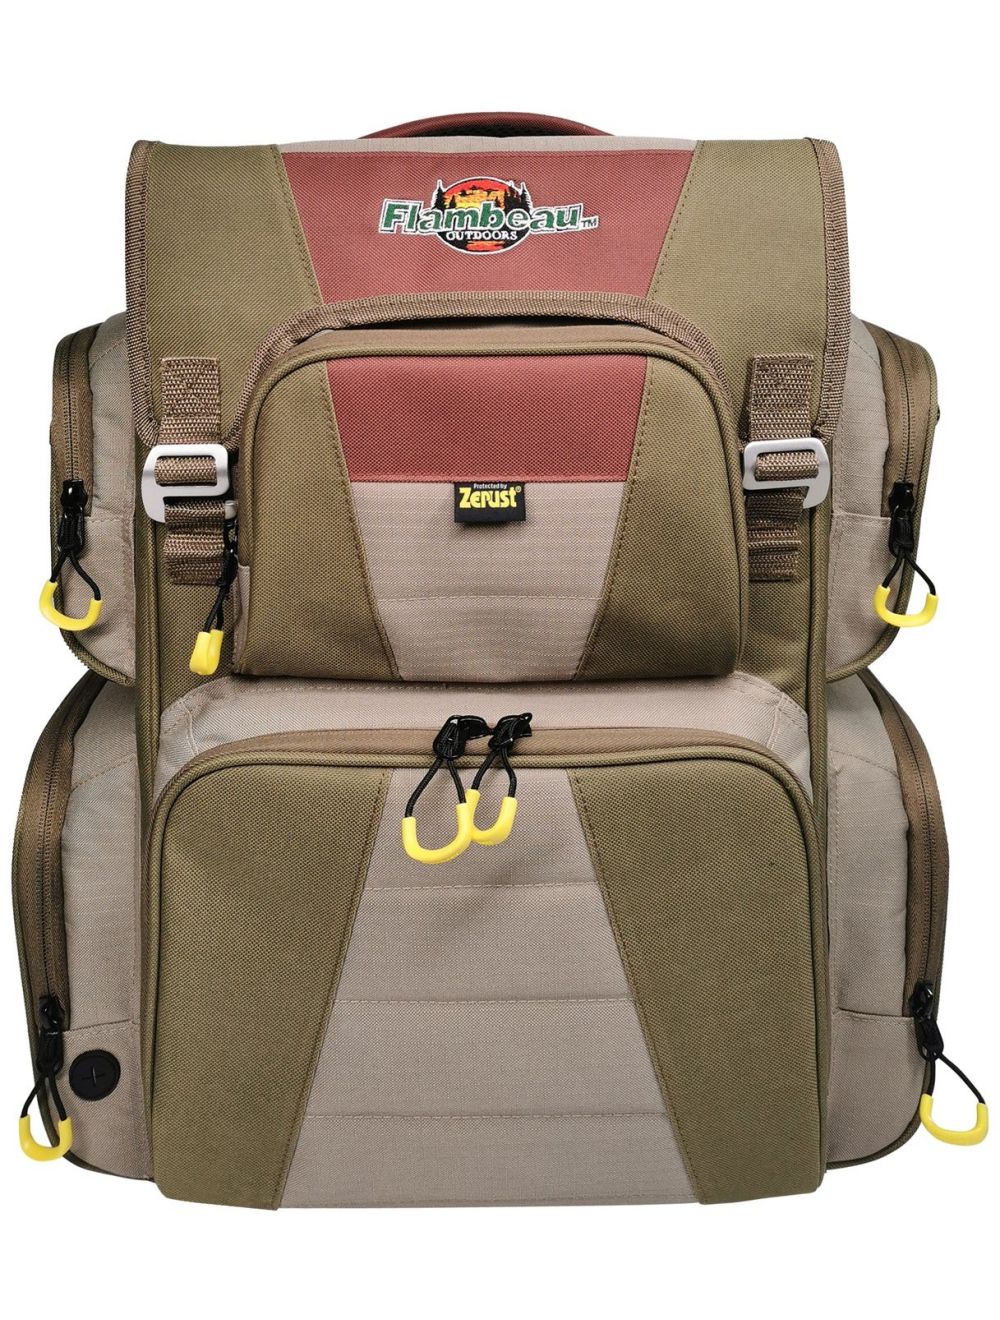 5007 Heritage Zerust Backpack